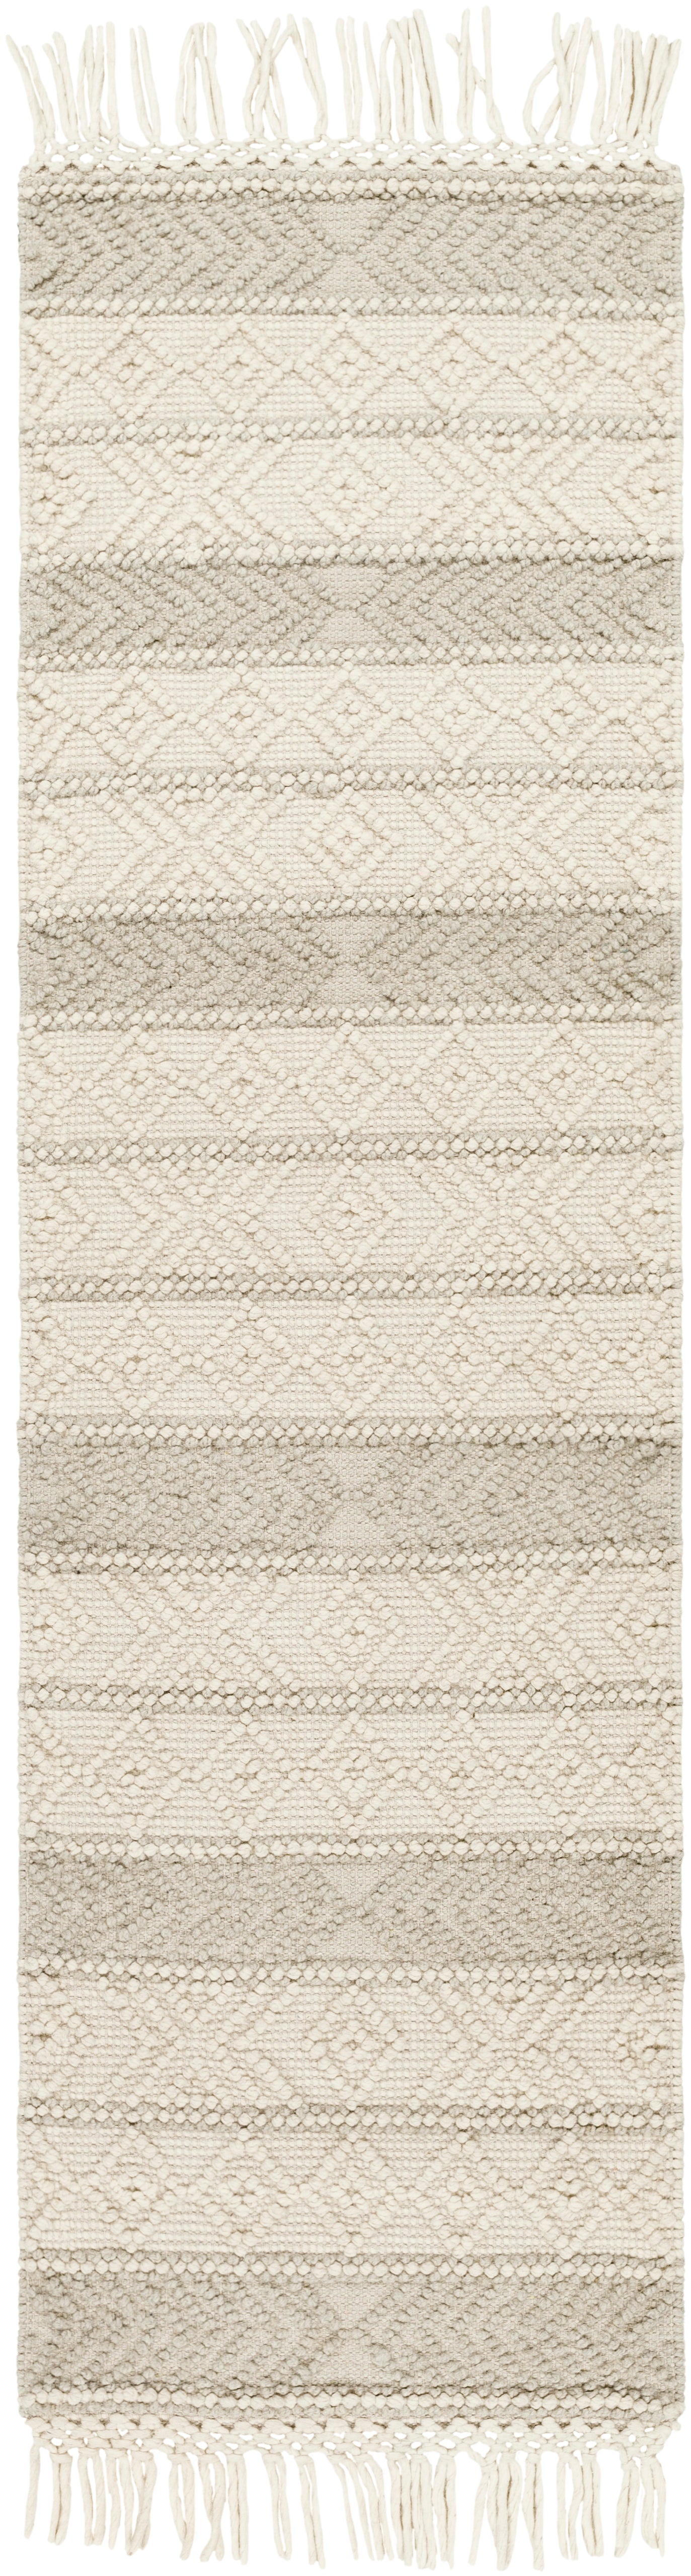 Hemingway 31316 Hand Woven Wool Indoor Area Rug by Surya Rugs